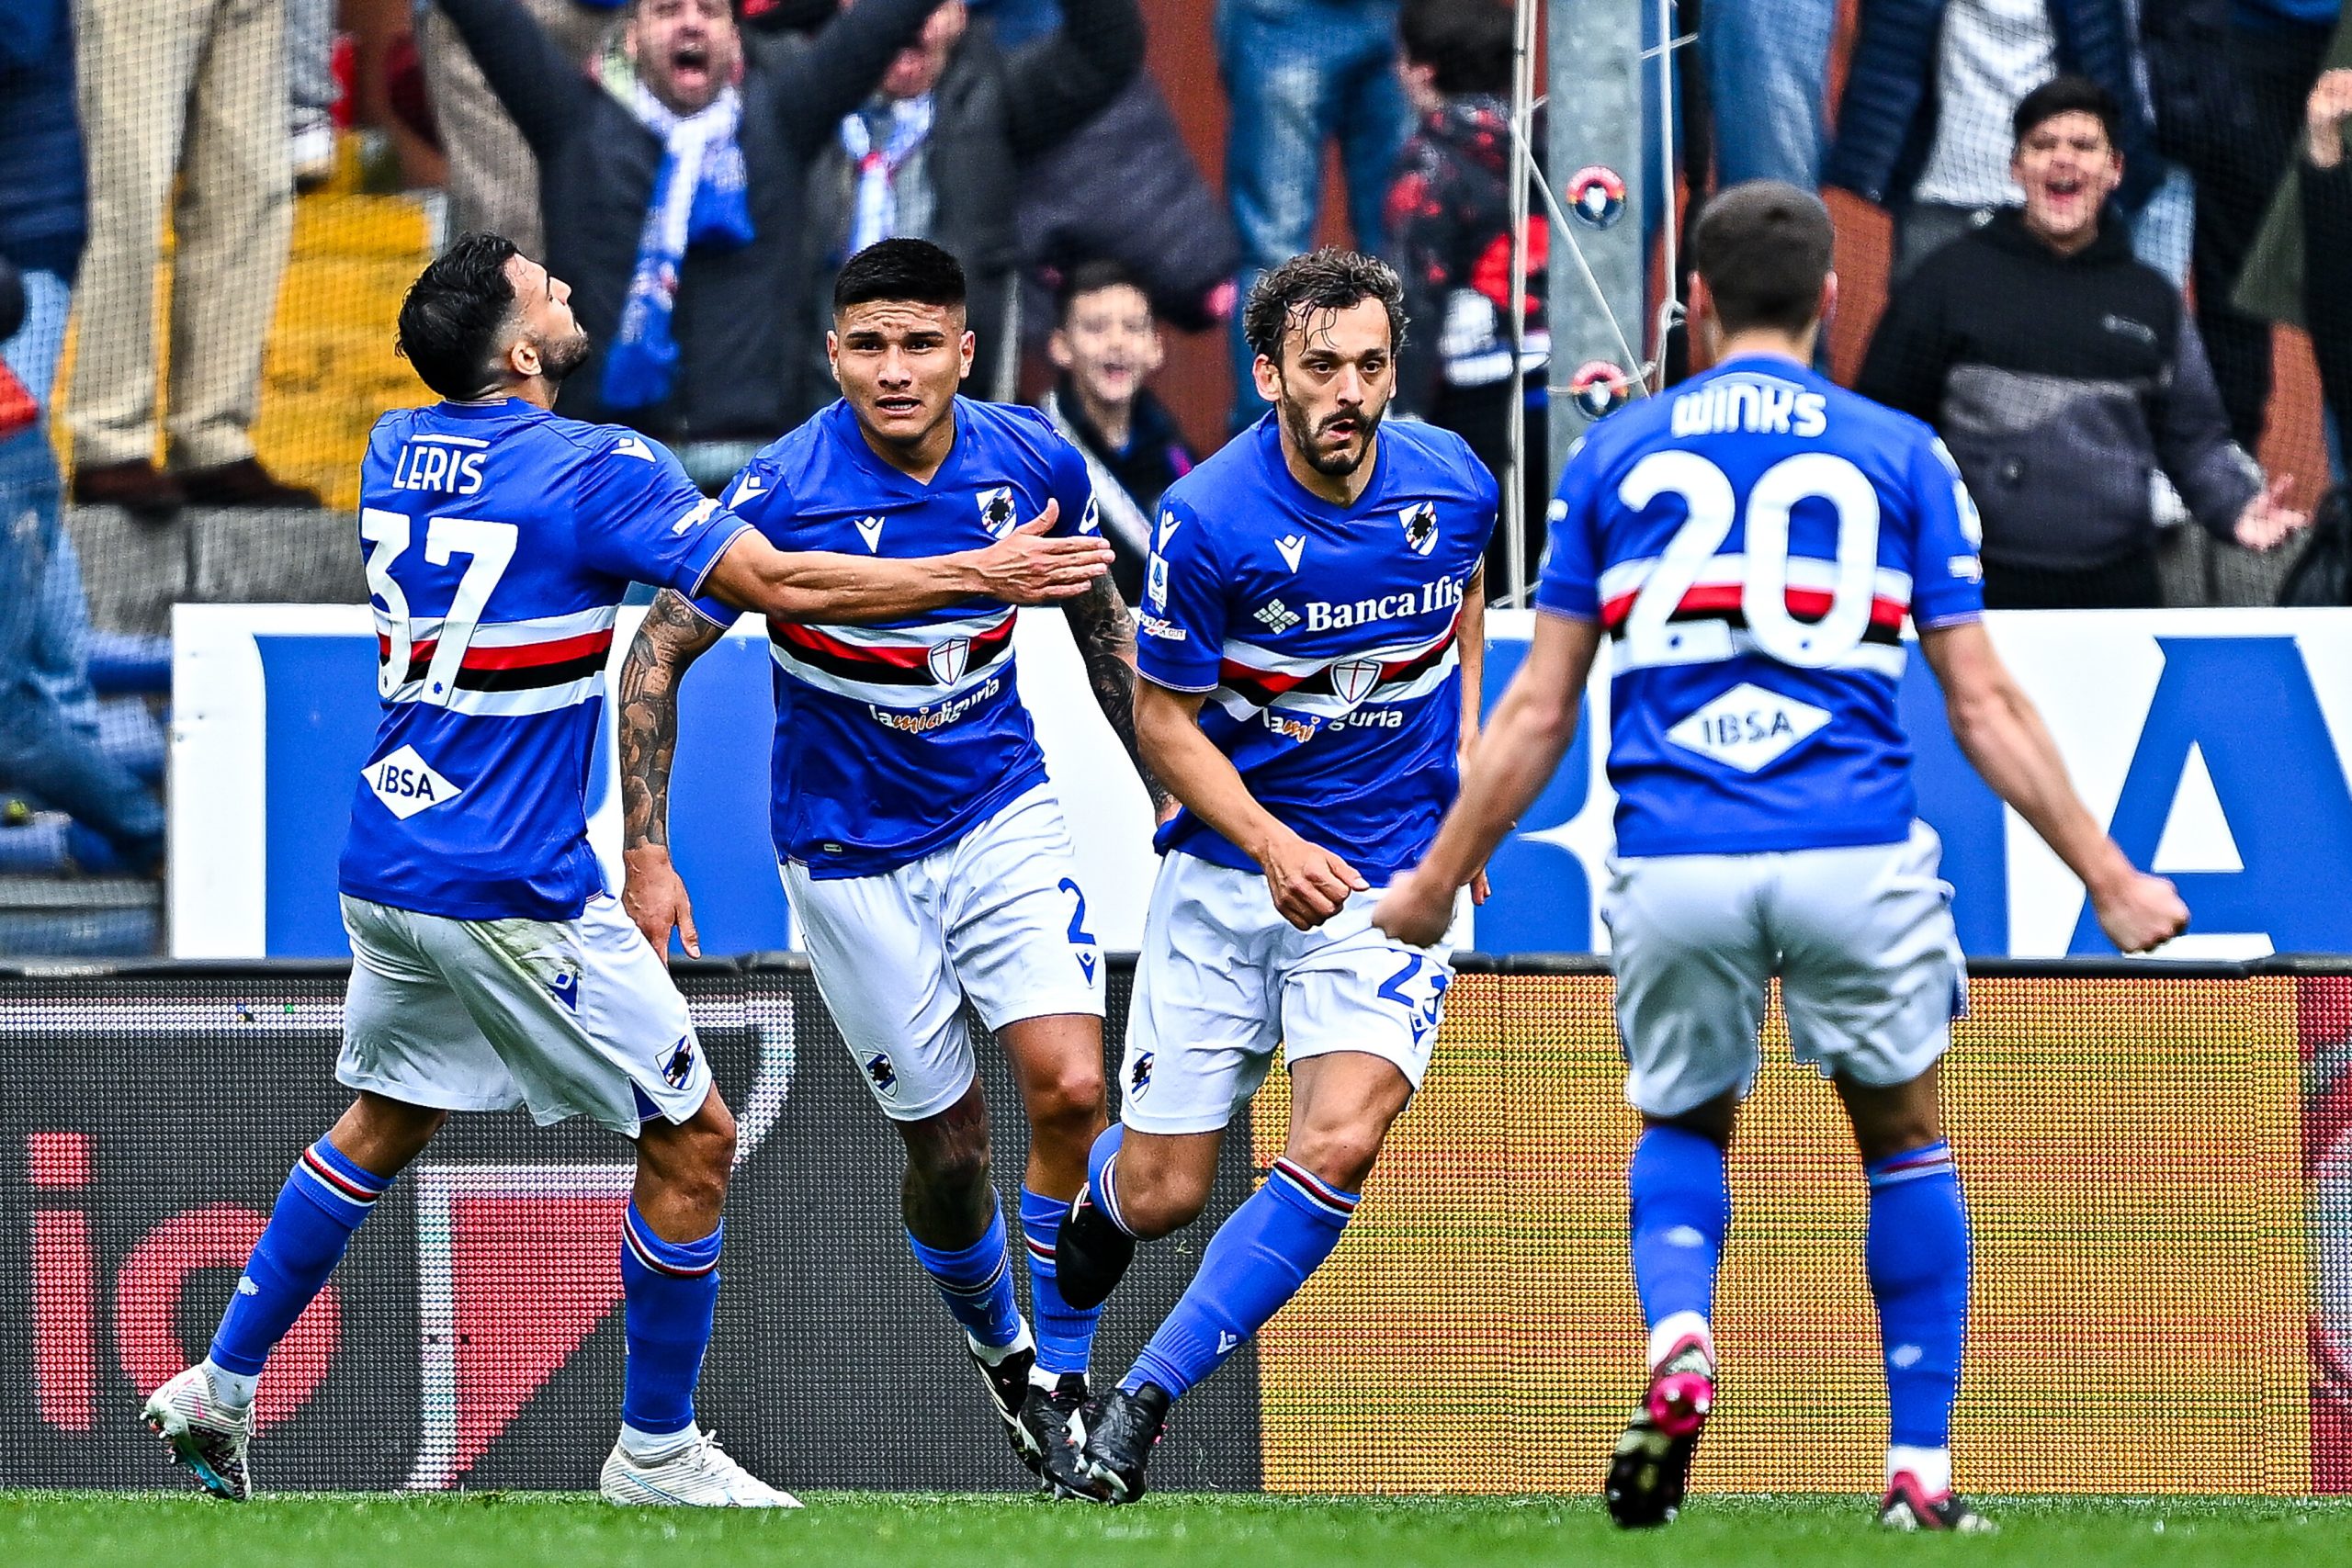 Sampdoria-Verona 3-1: mattoncino salvezza per i doria